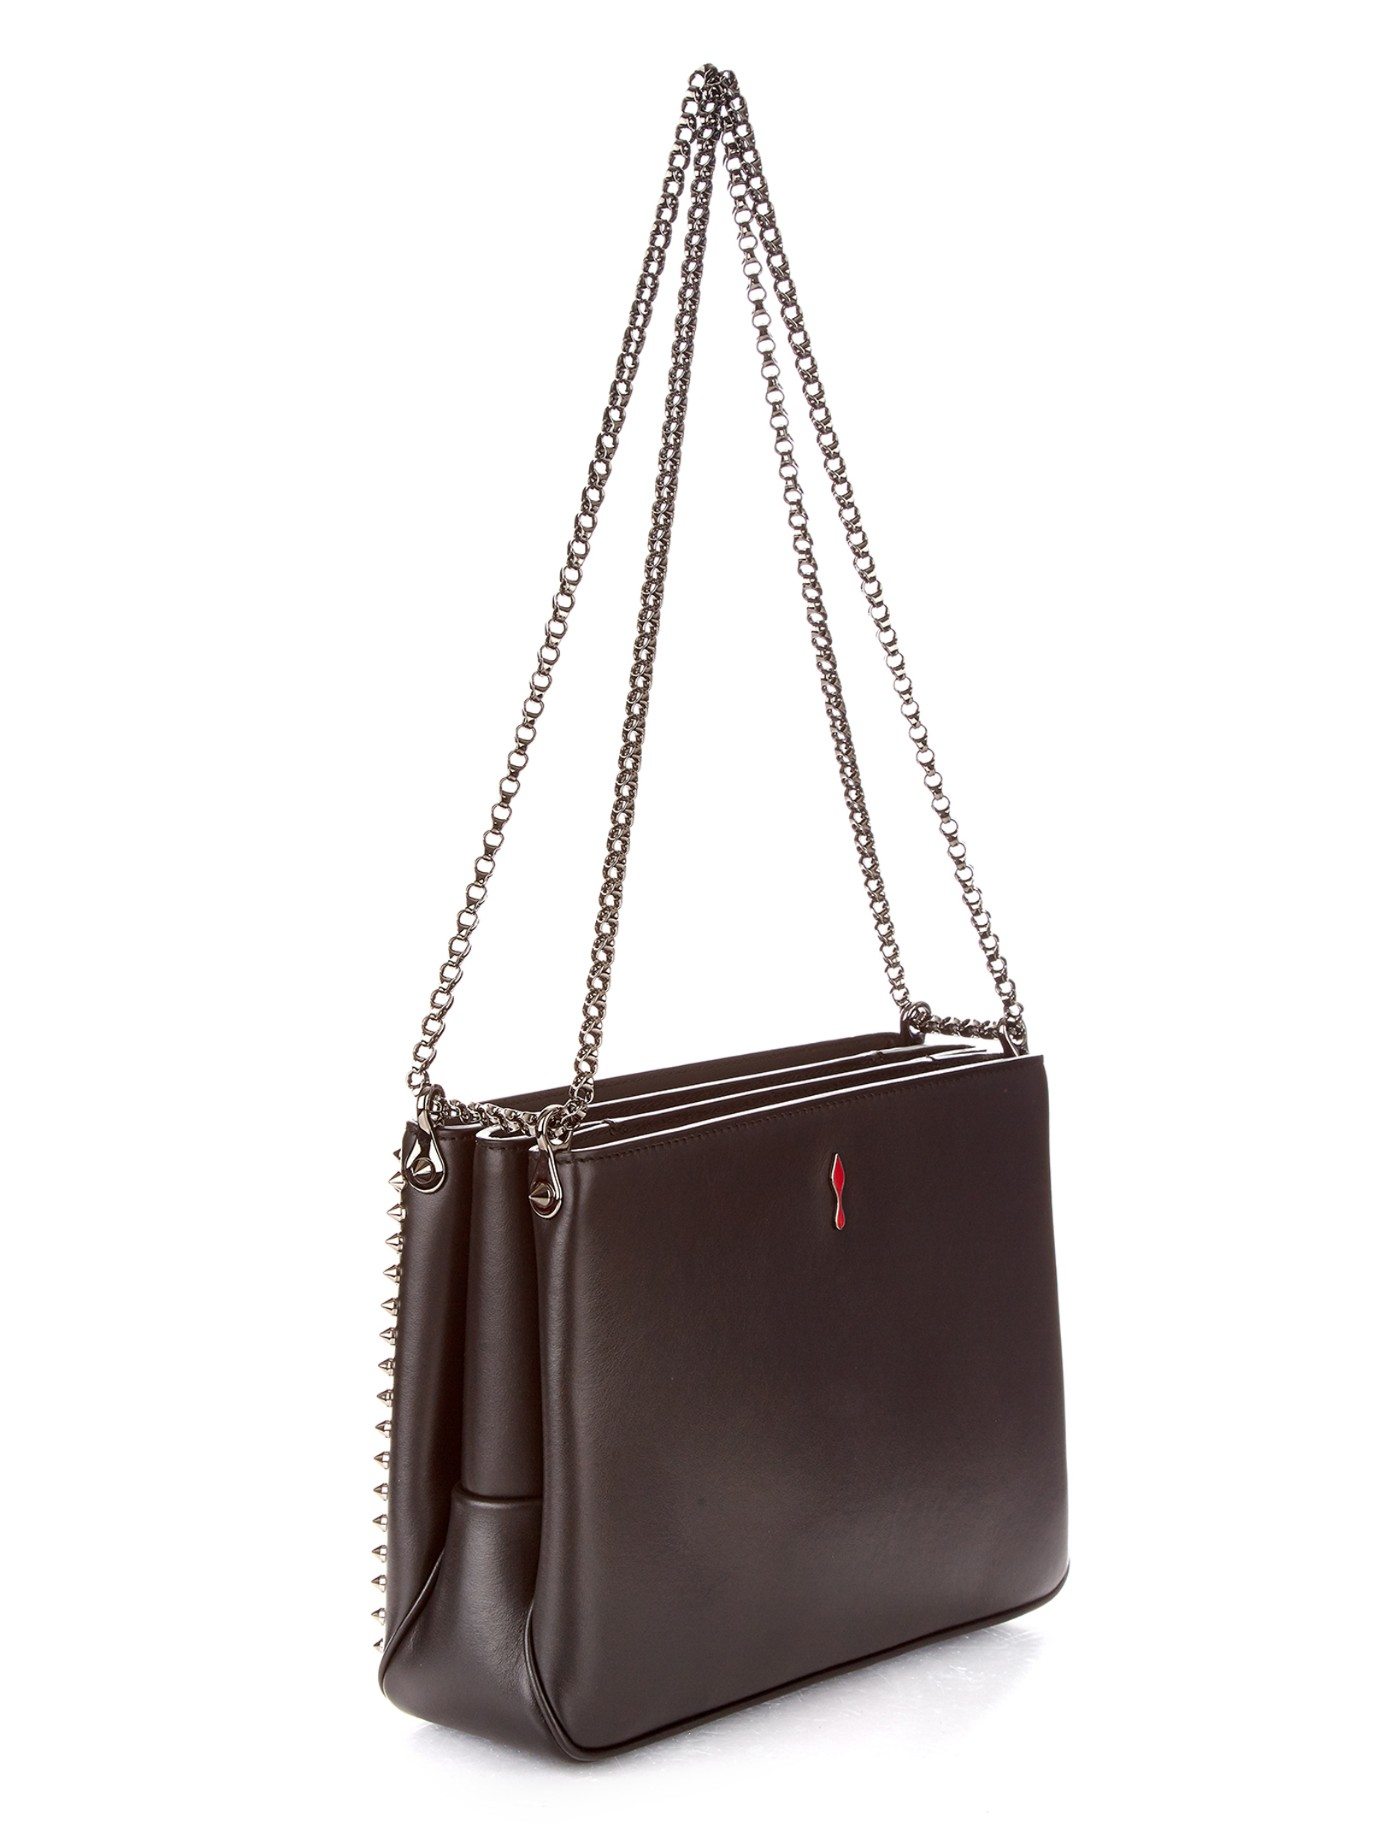 Christian Louboutin Triloubi Leather Handbag